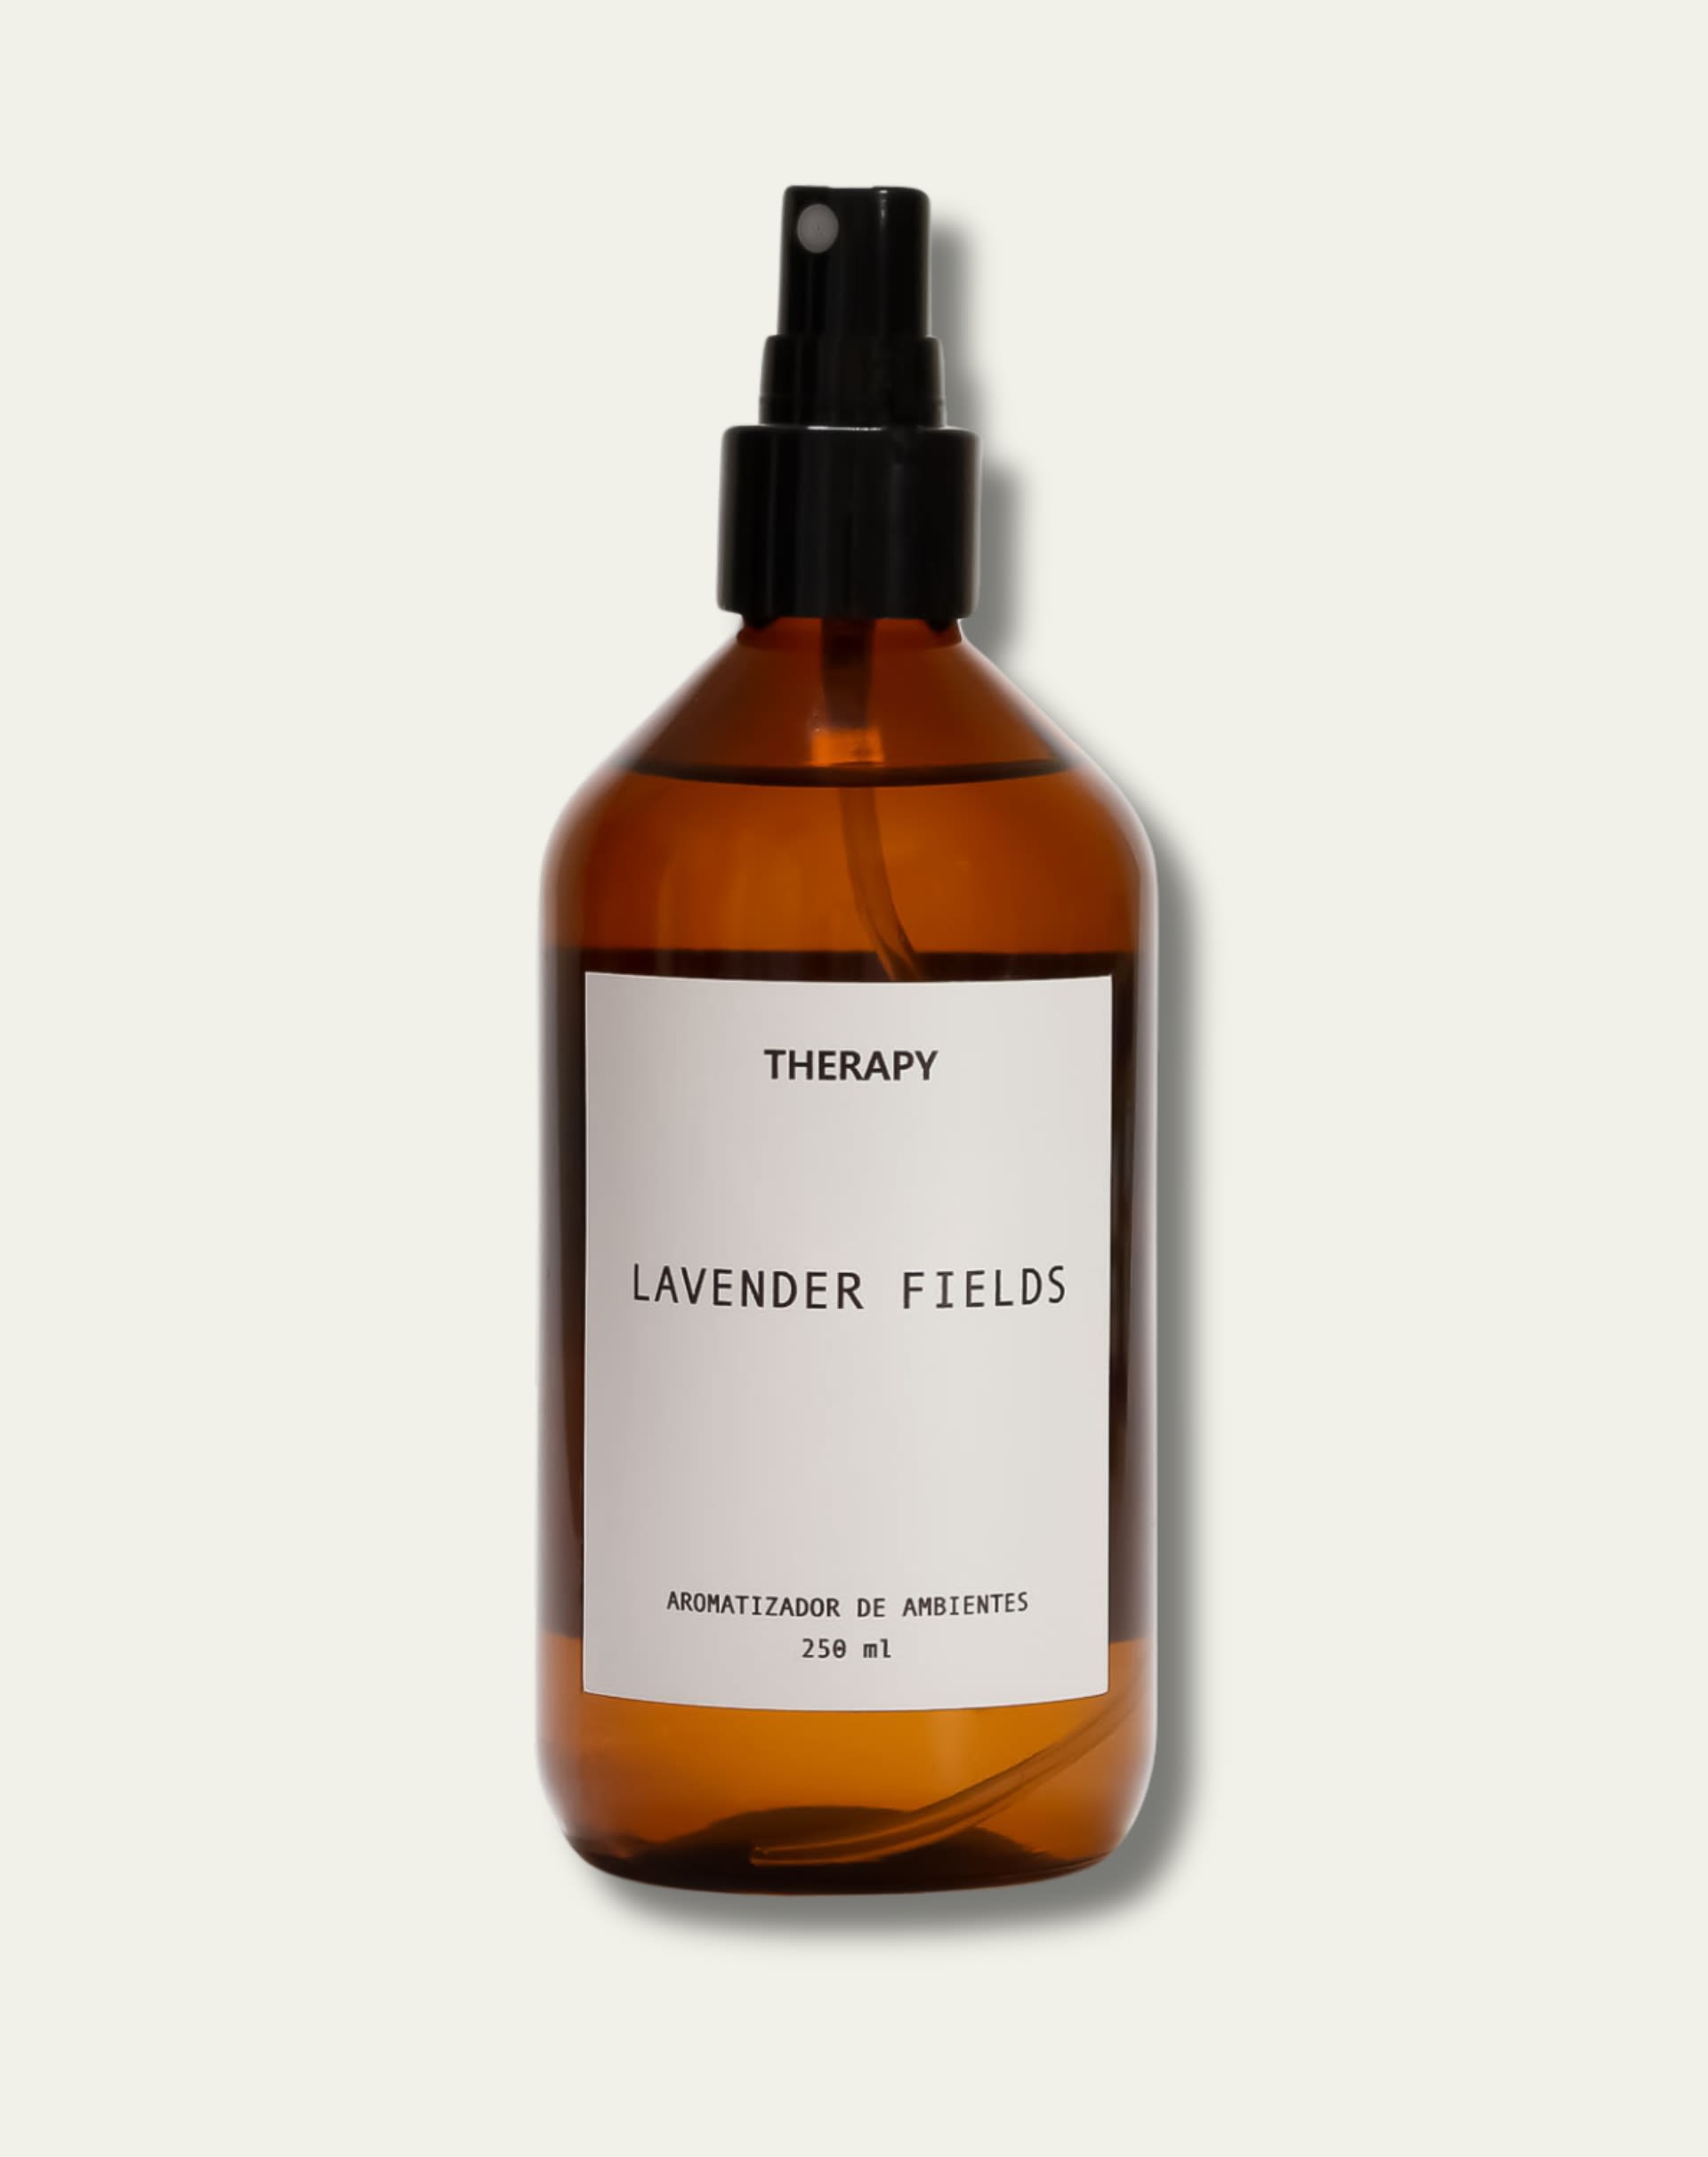 Lavender Fields Aromatizador de Ambientes Spray - THERAPY 250ml - NEUTRA